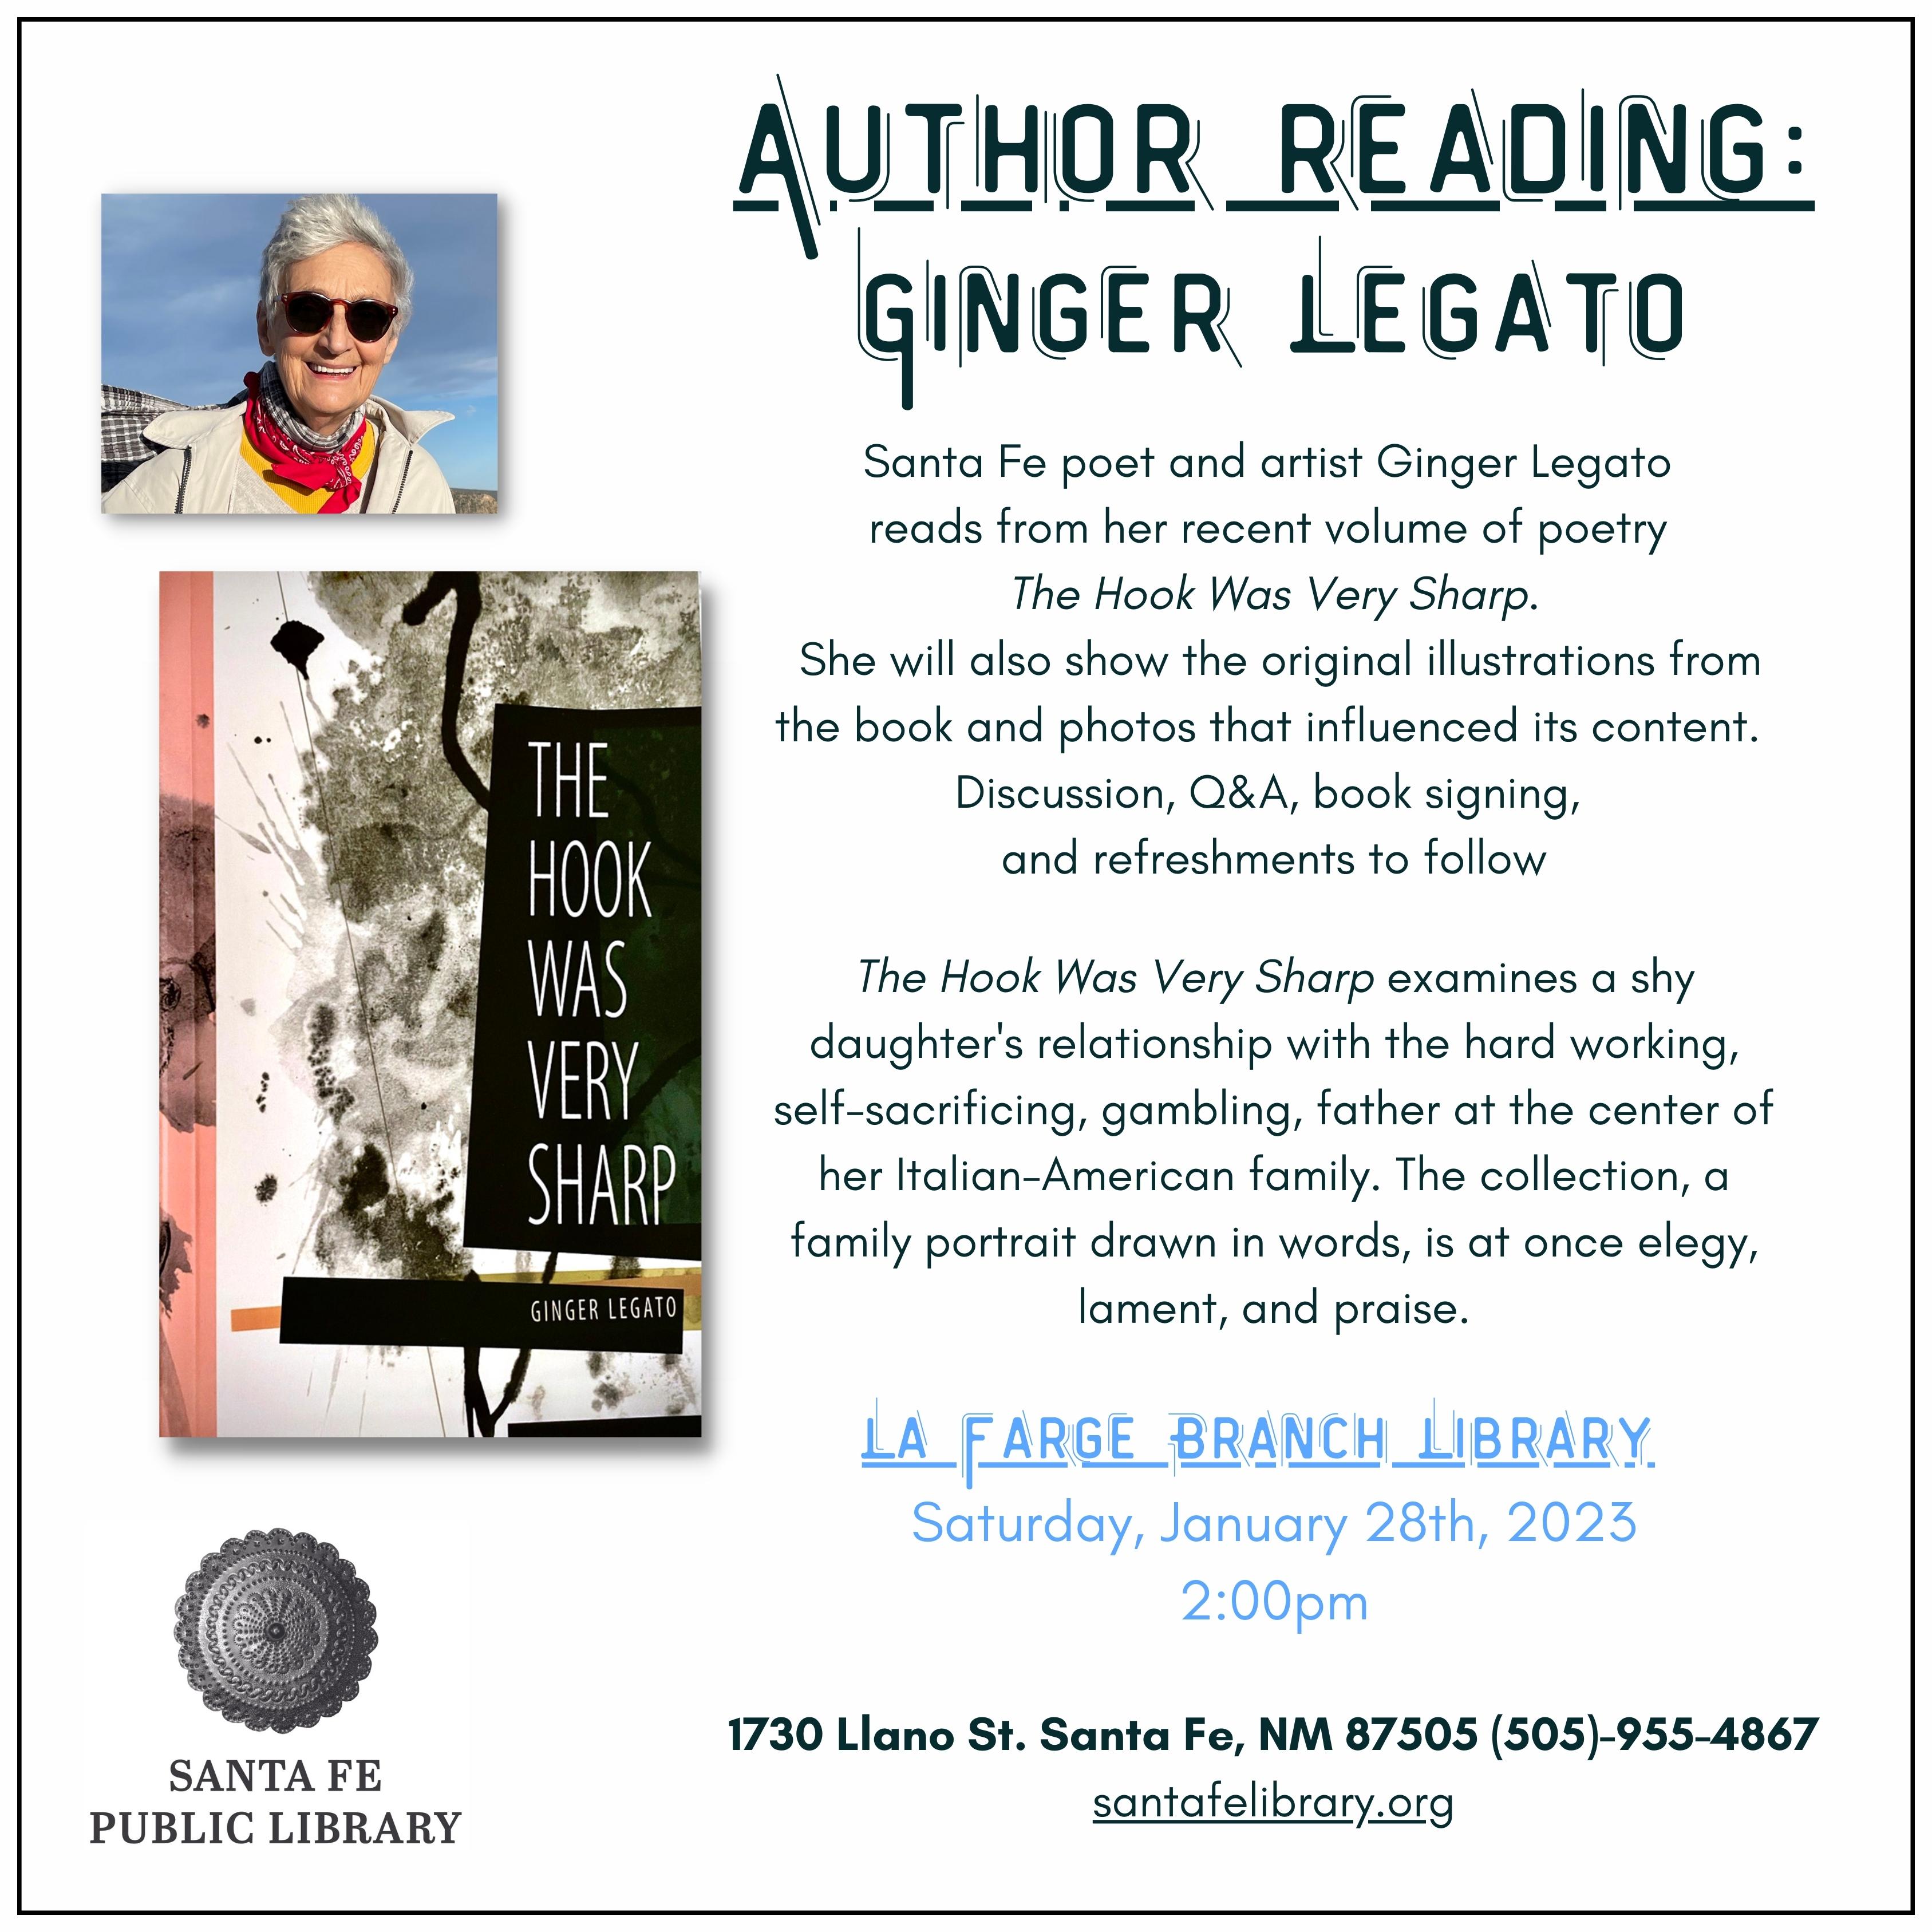 Author Reading: Ginger Legato